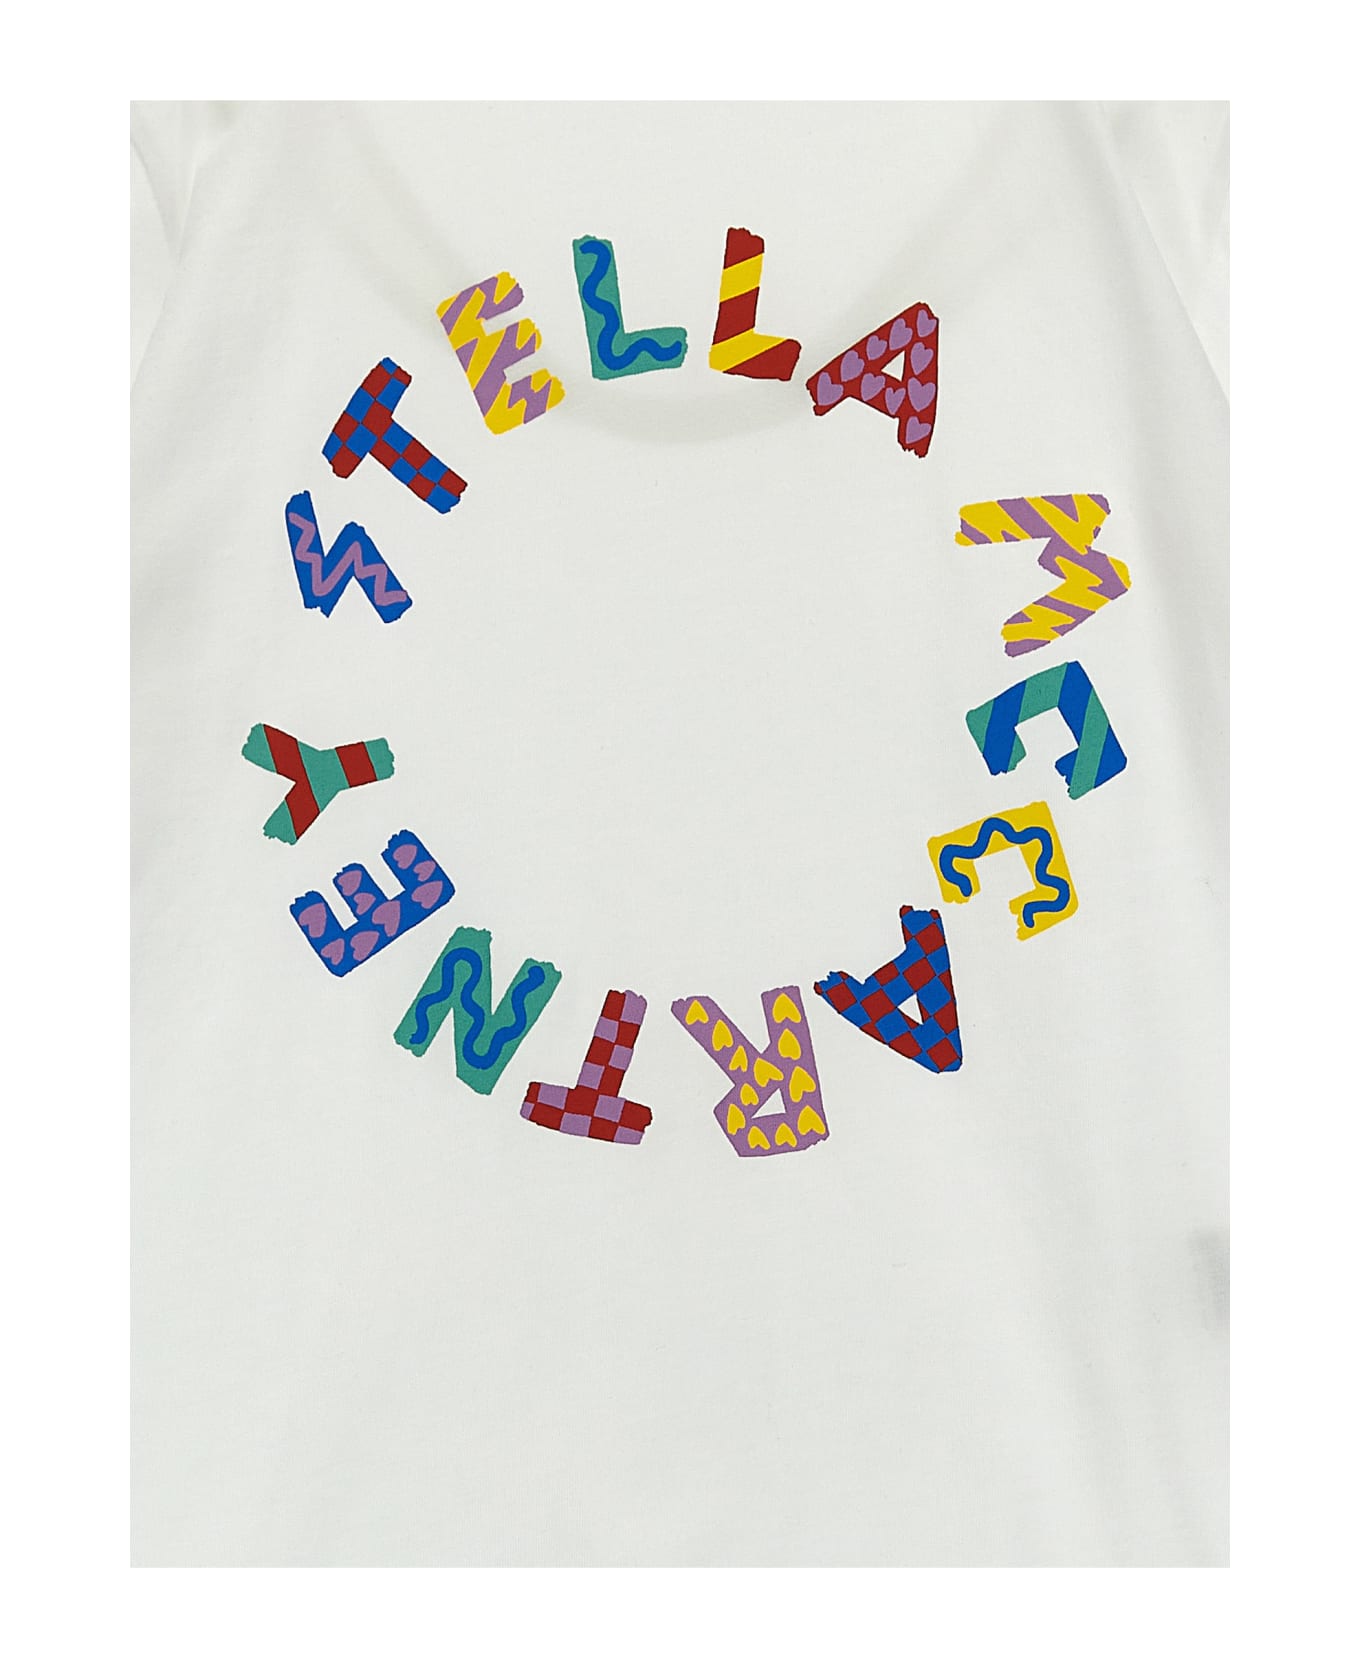 Stella McCartney Printed T-shirt - White